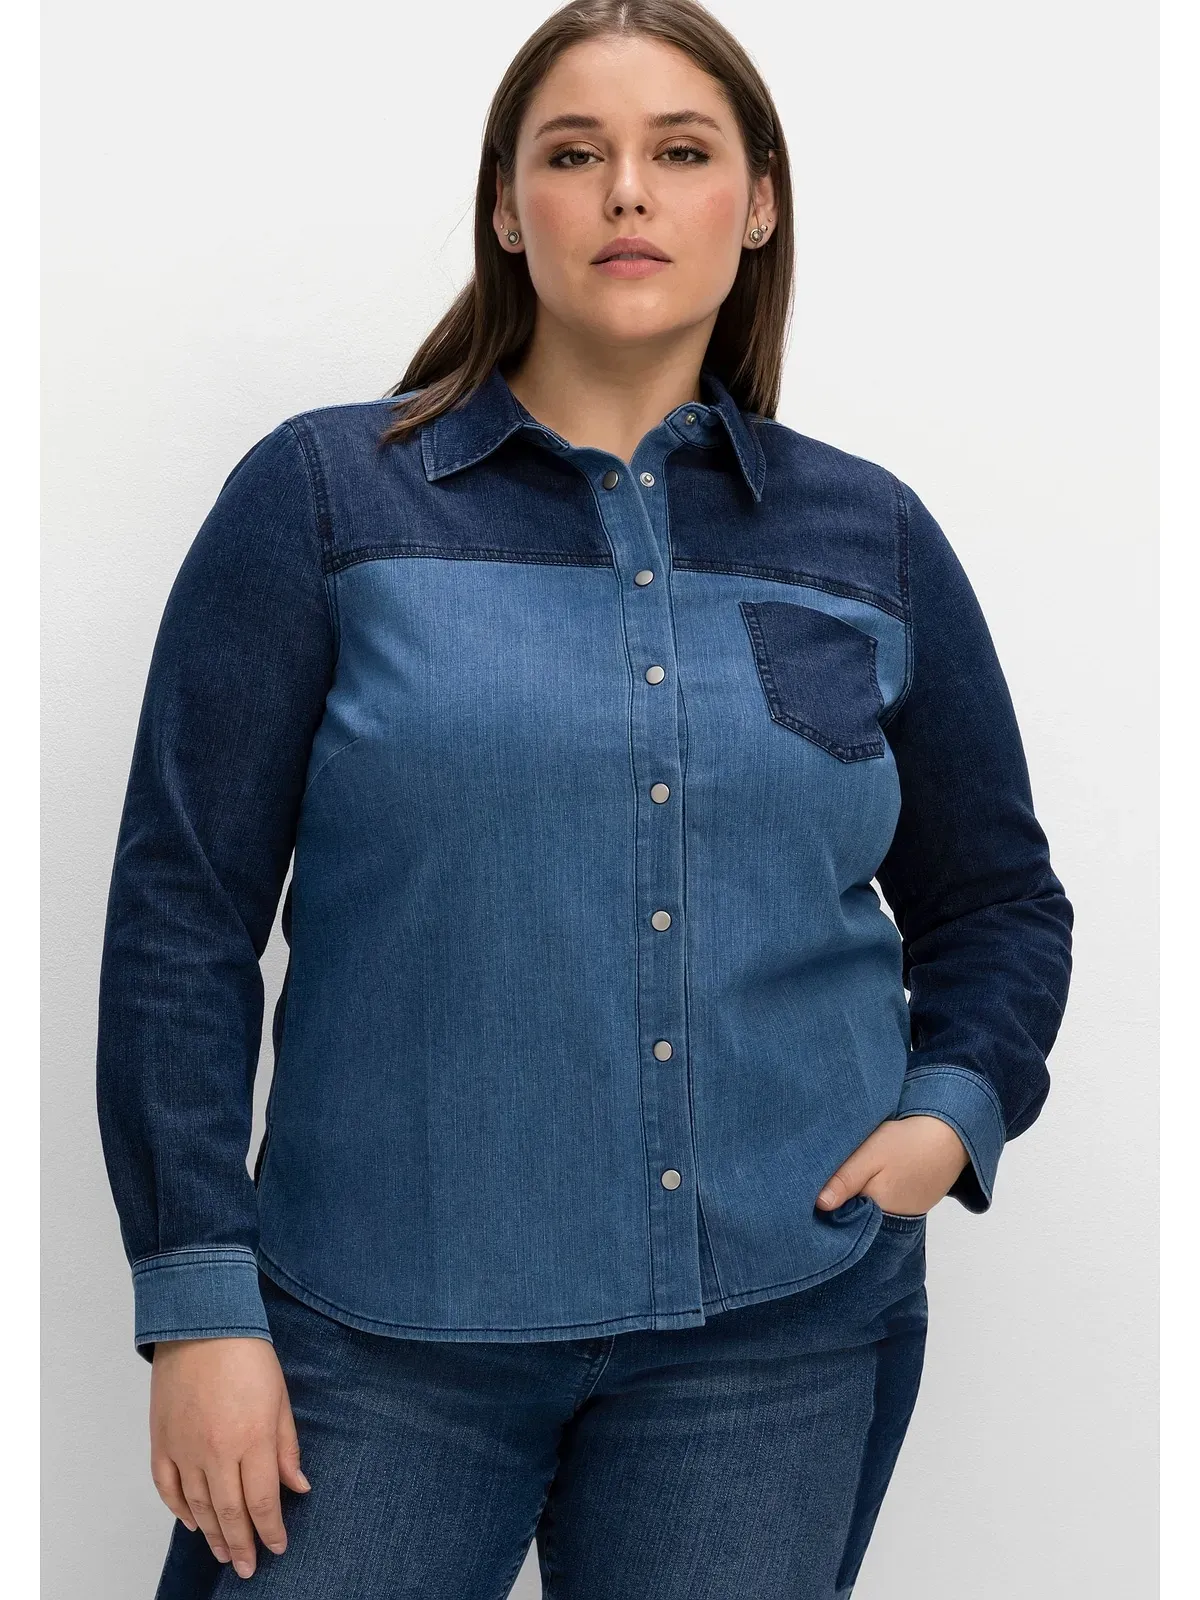 Jeansbluse SHEEGO "Große Größen" Gr. 42, blau (blue denim) Damen Blusen langarm